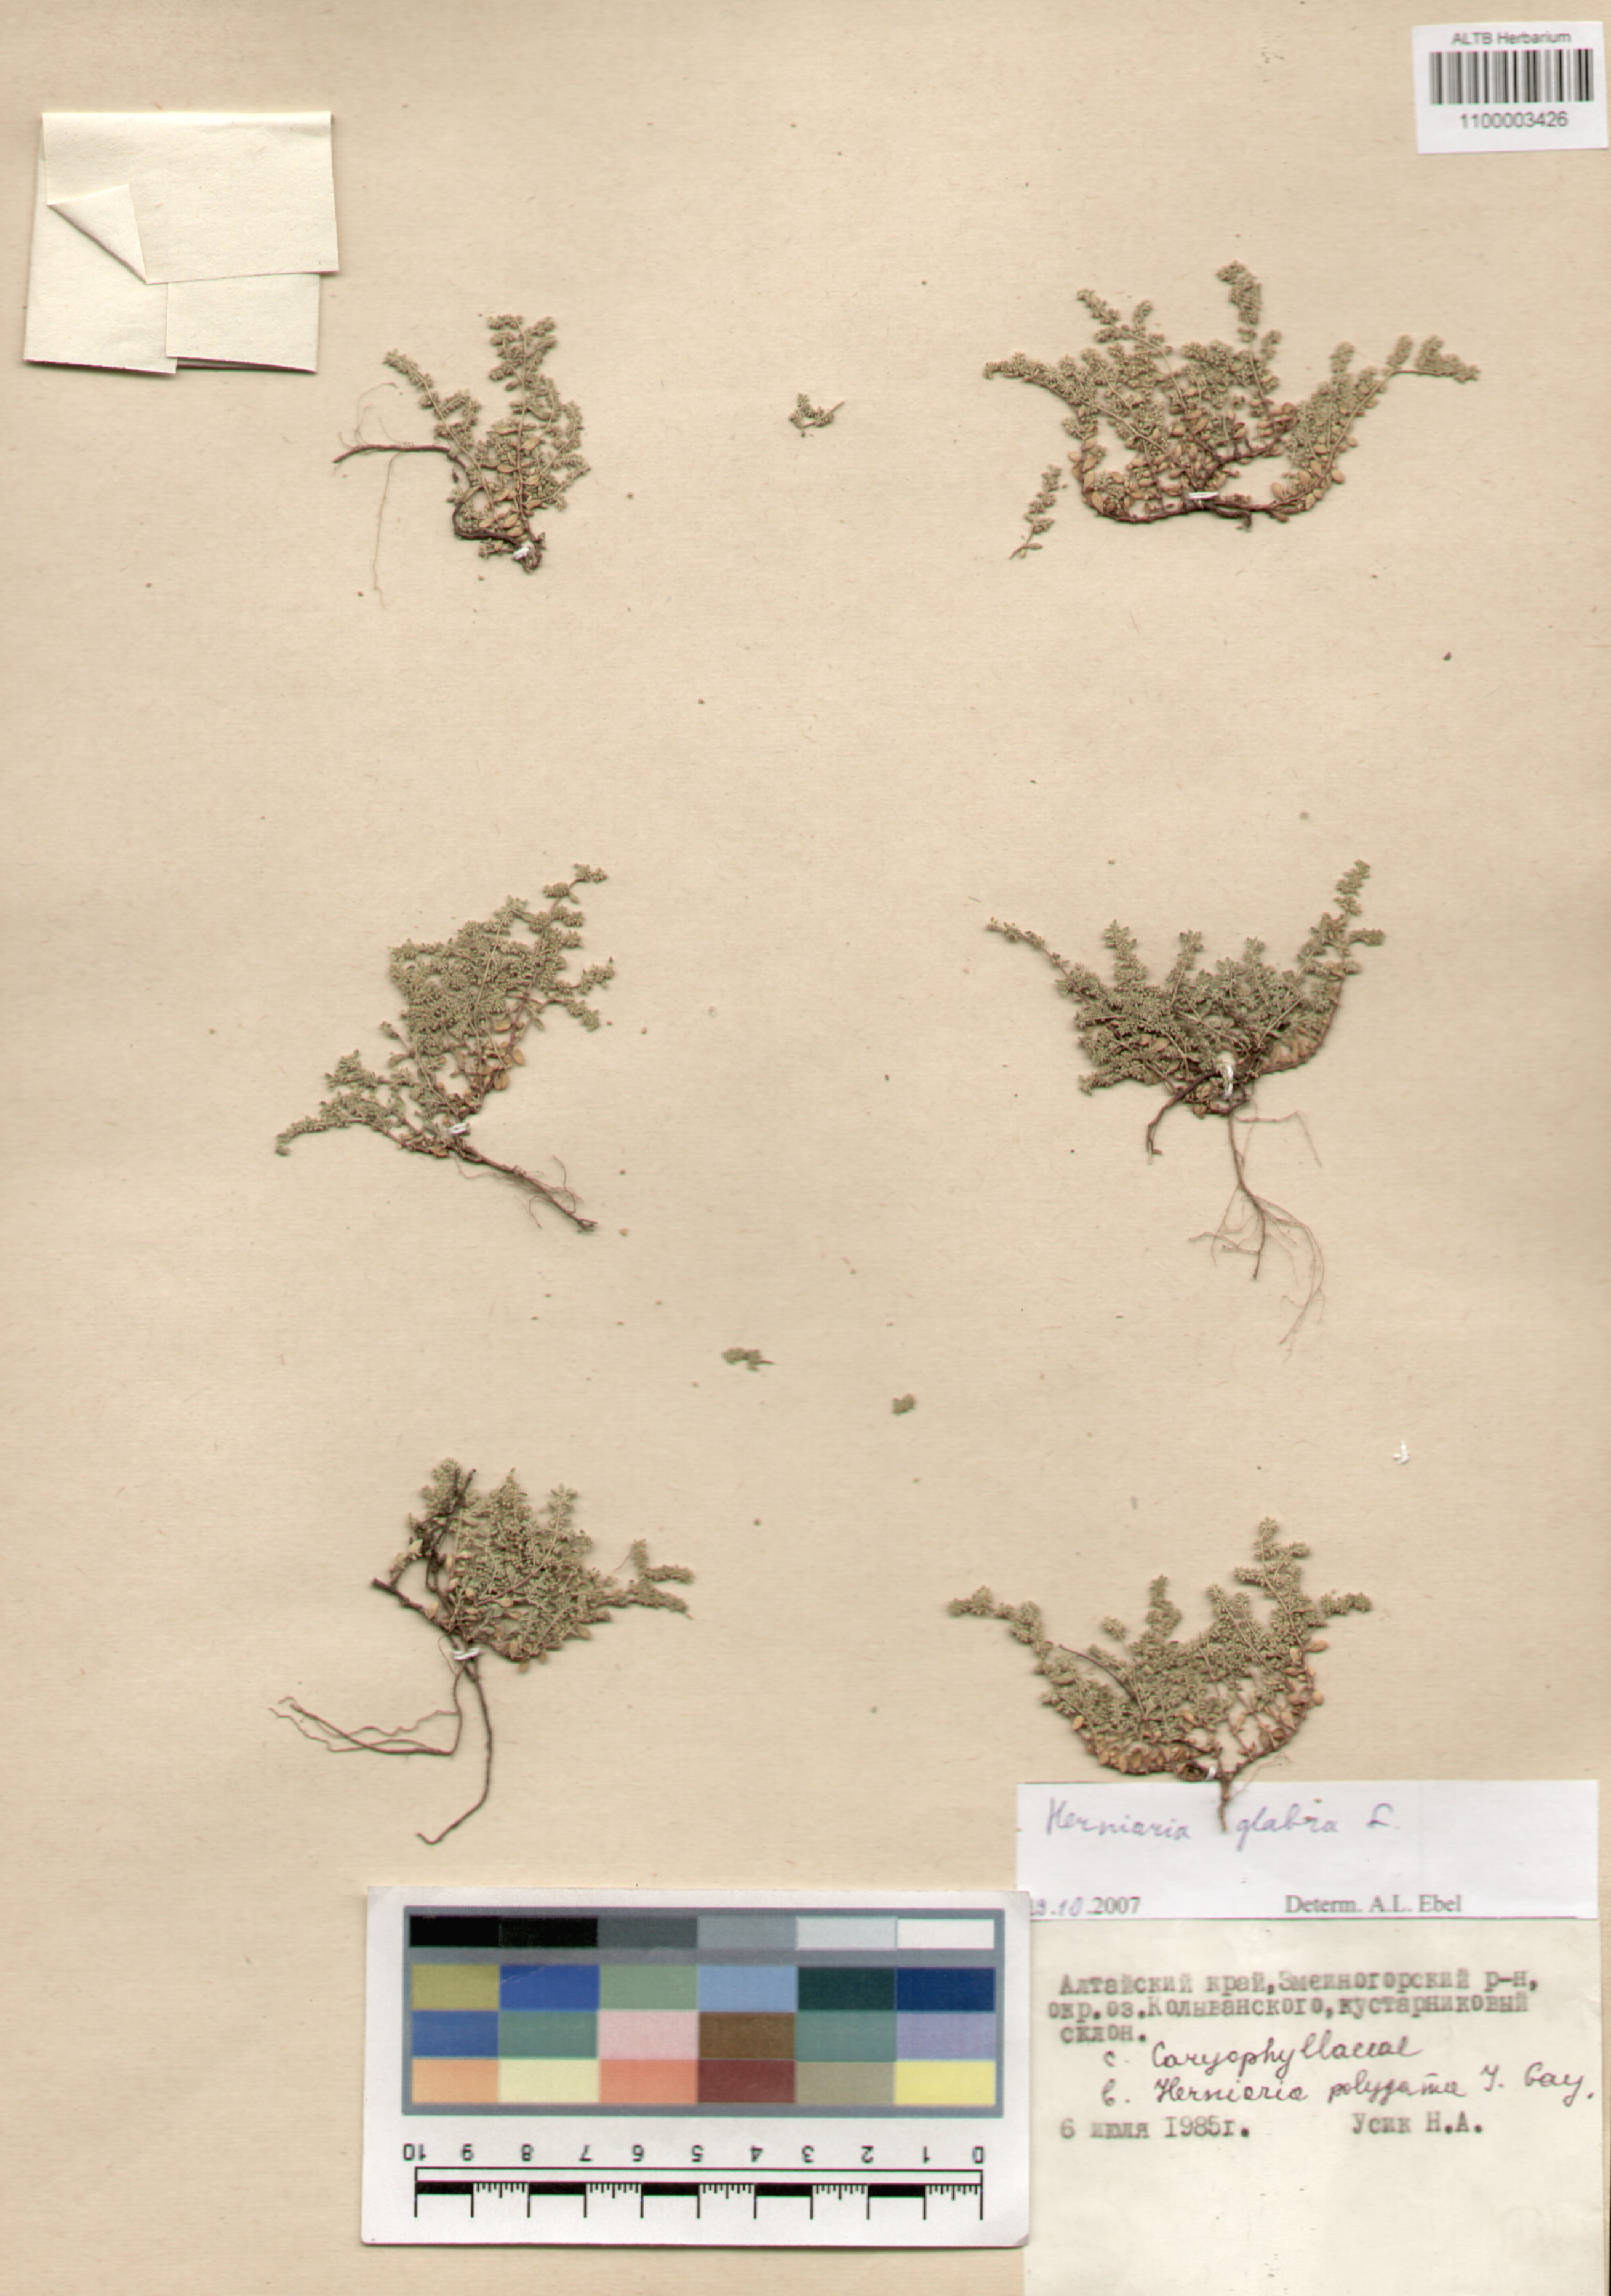 Caryophyllaceae,Herniaria glabra L.